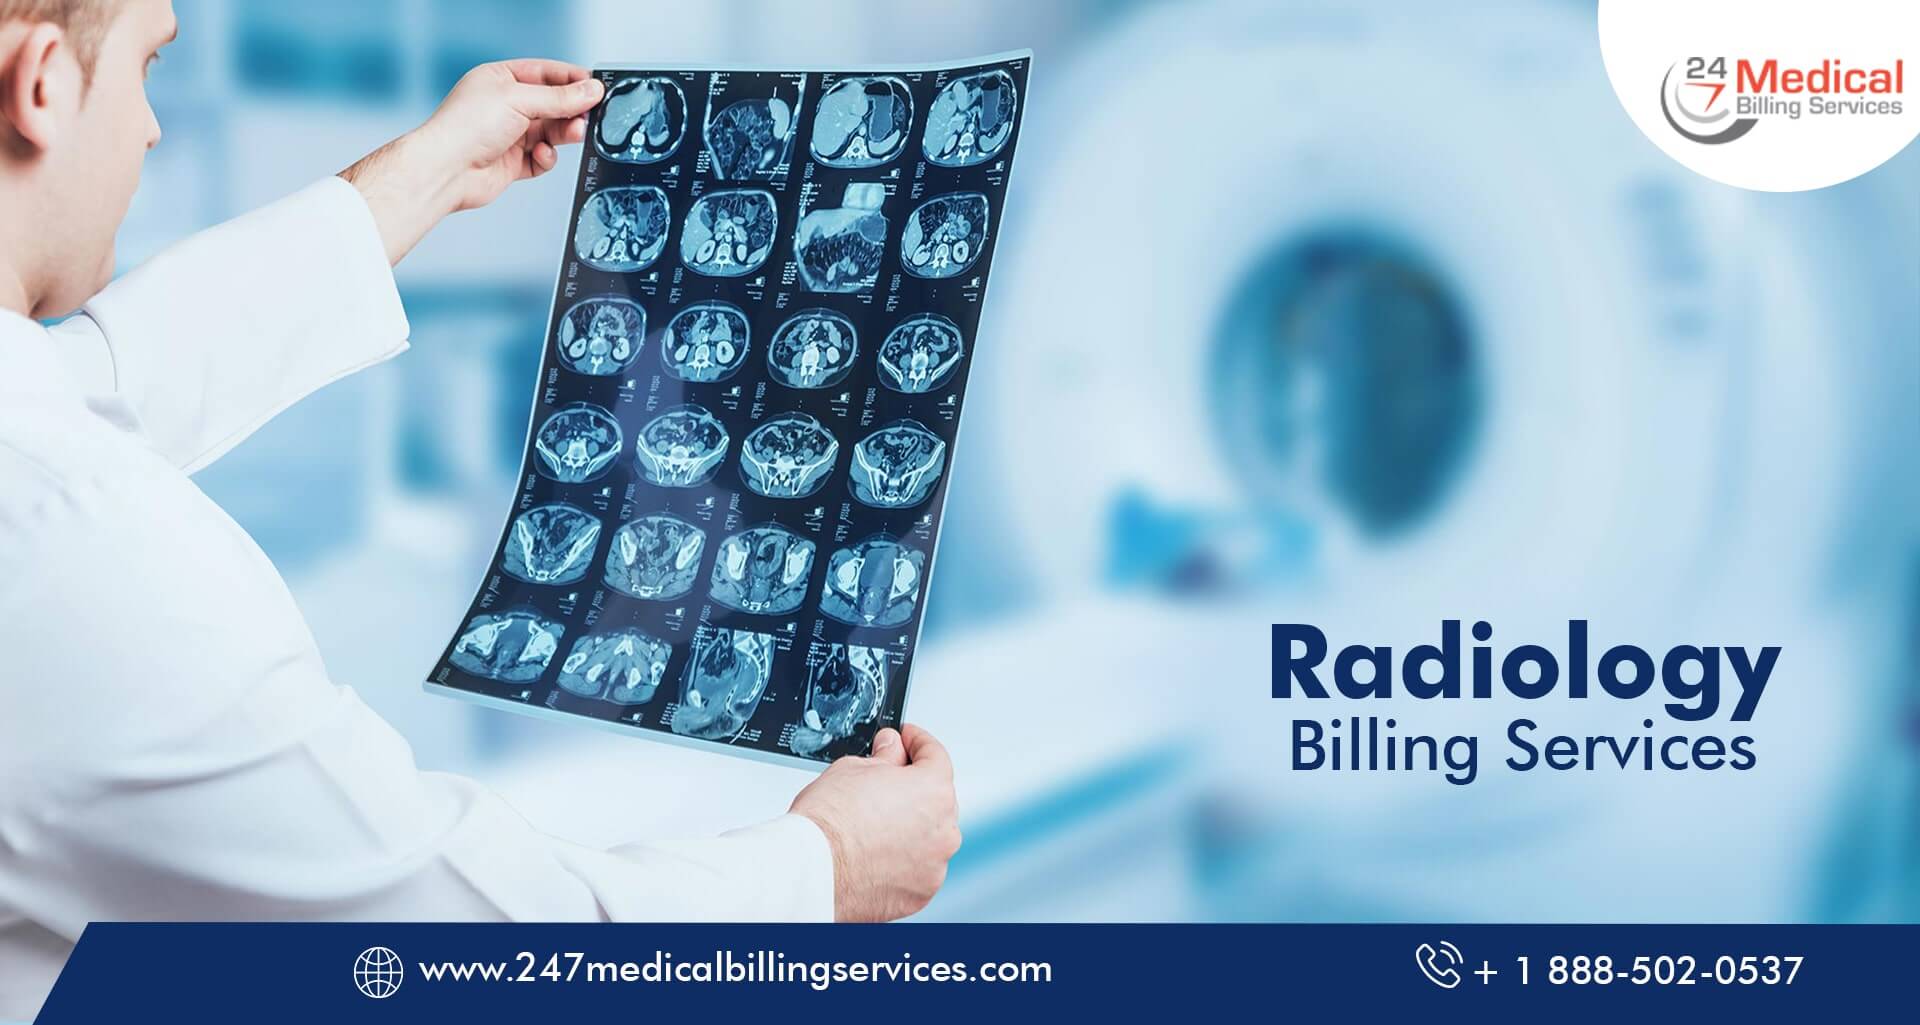 Radiology Billing Services in Atlanta, Georgia (GA) - 24/7 Medical Billing Services